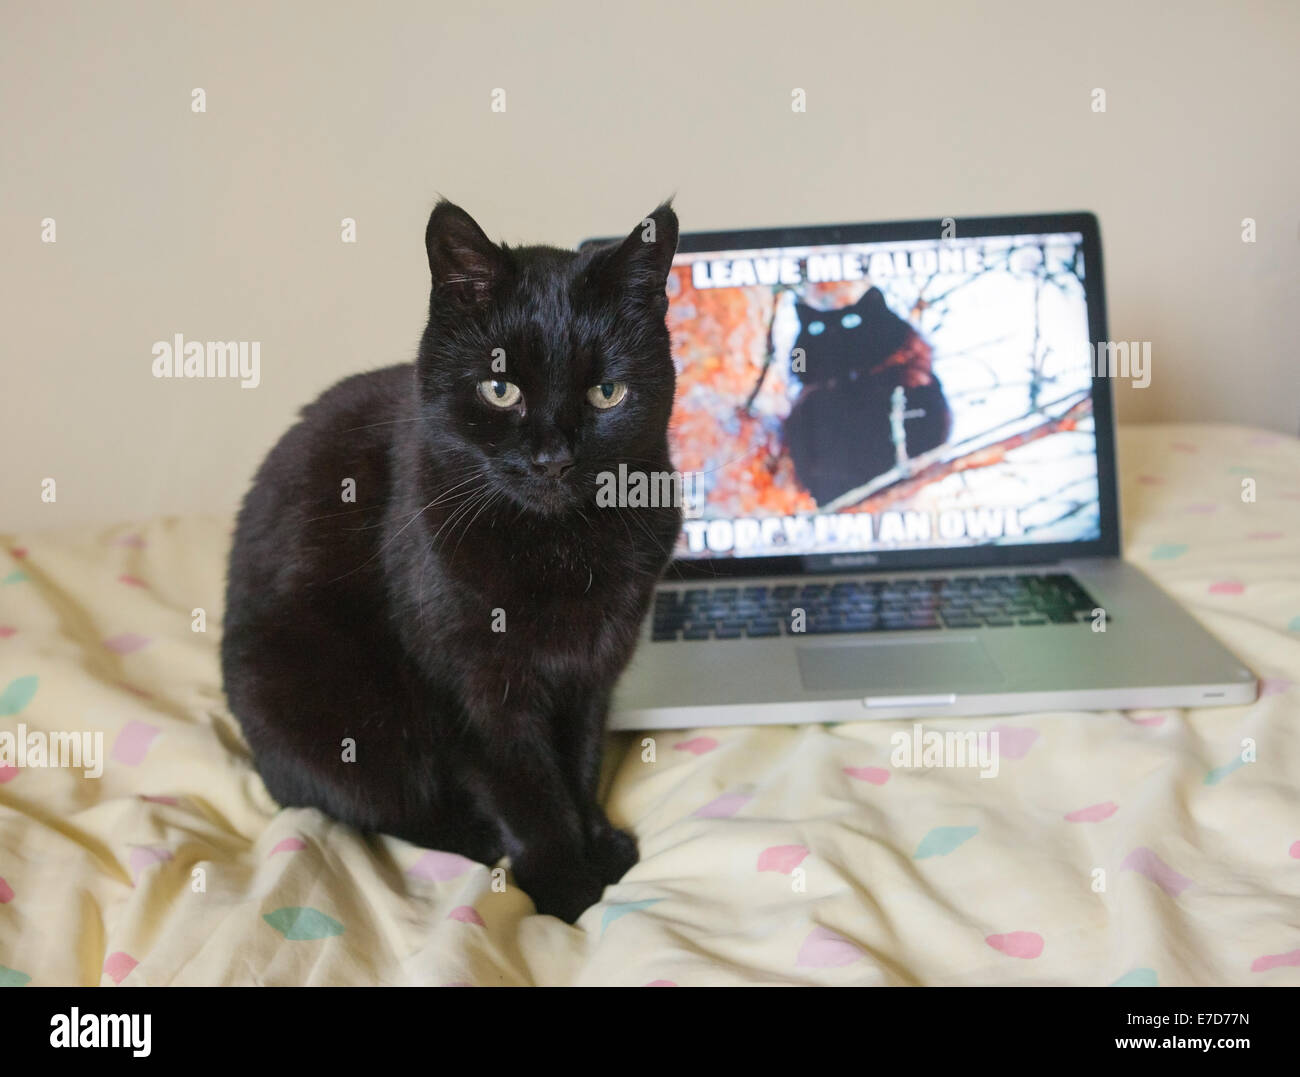 A black cat sat next to a macbook with a black cat desktop Stock Photo